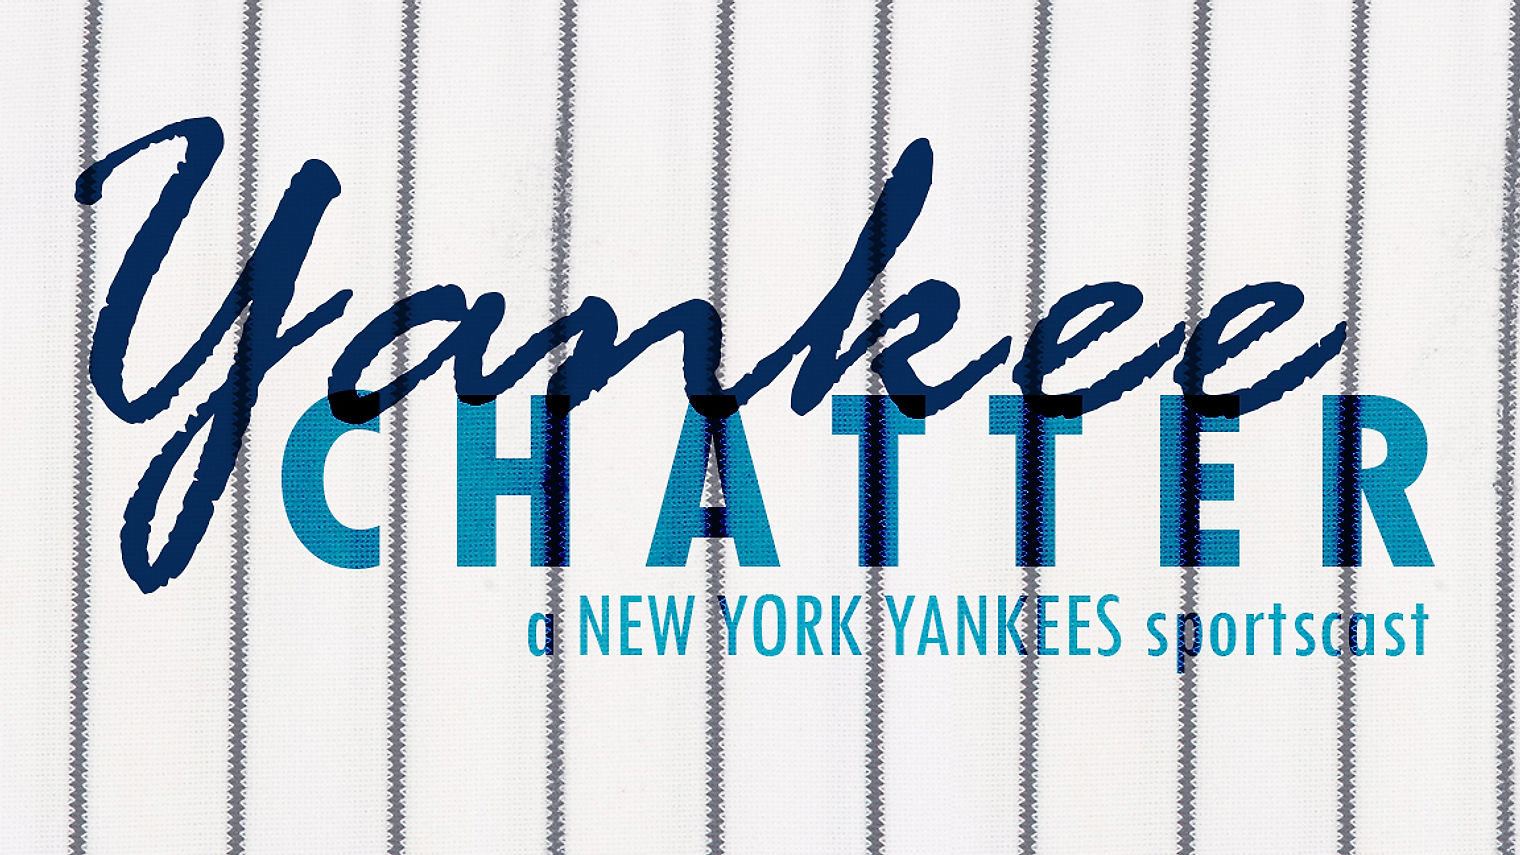 Yankee Chatter: A New York Yankees Sportscast